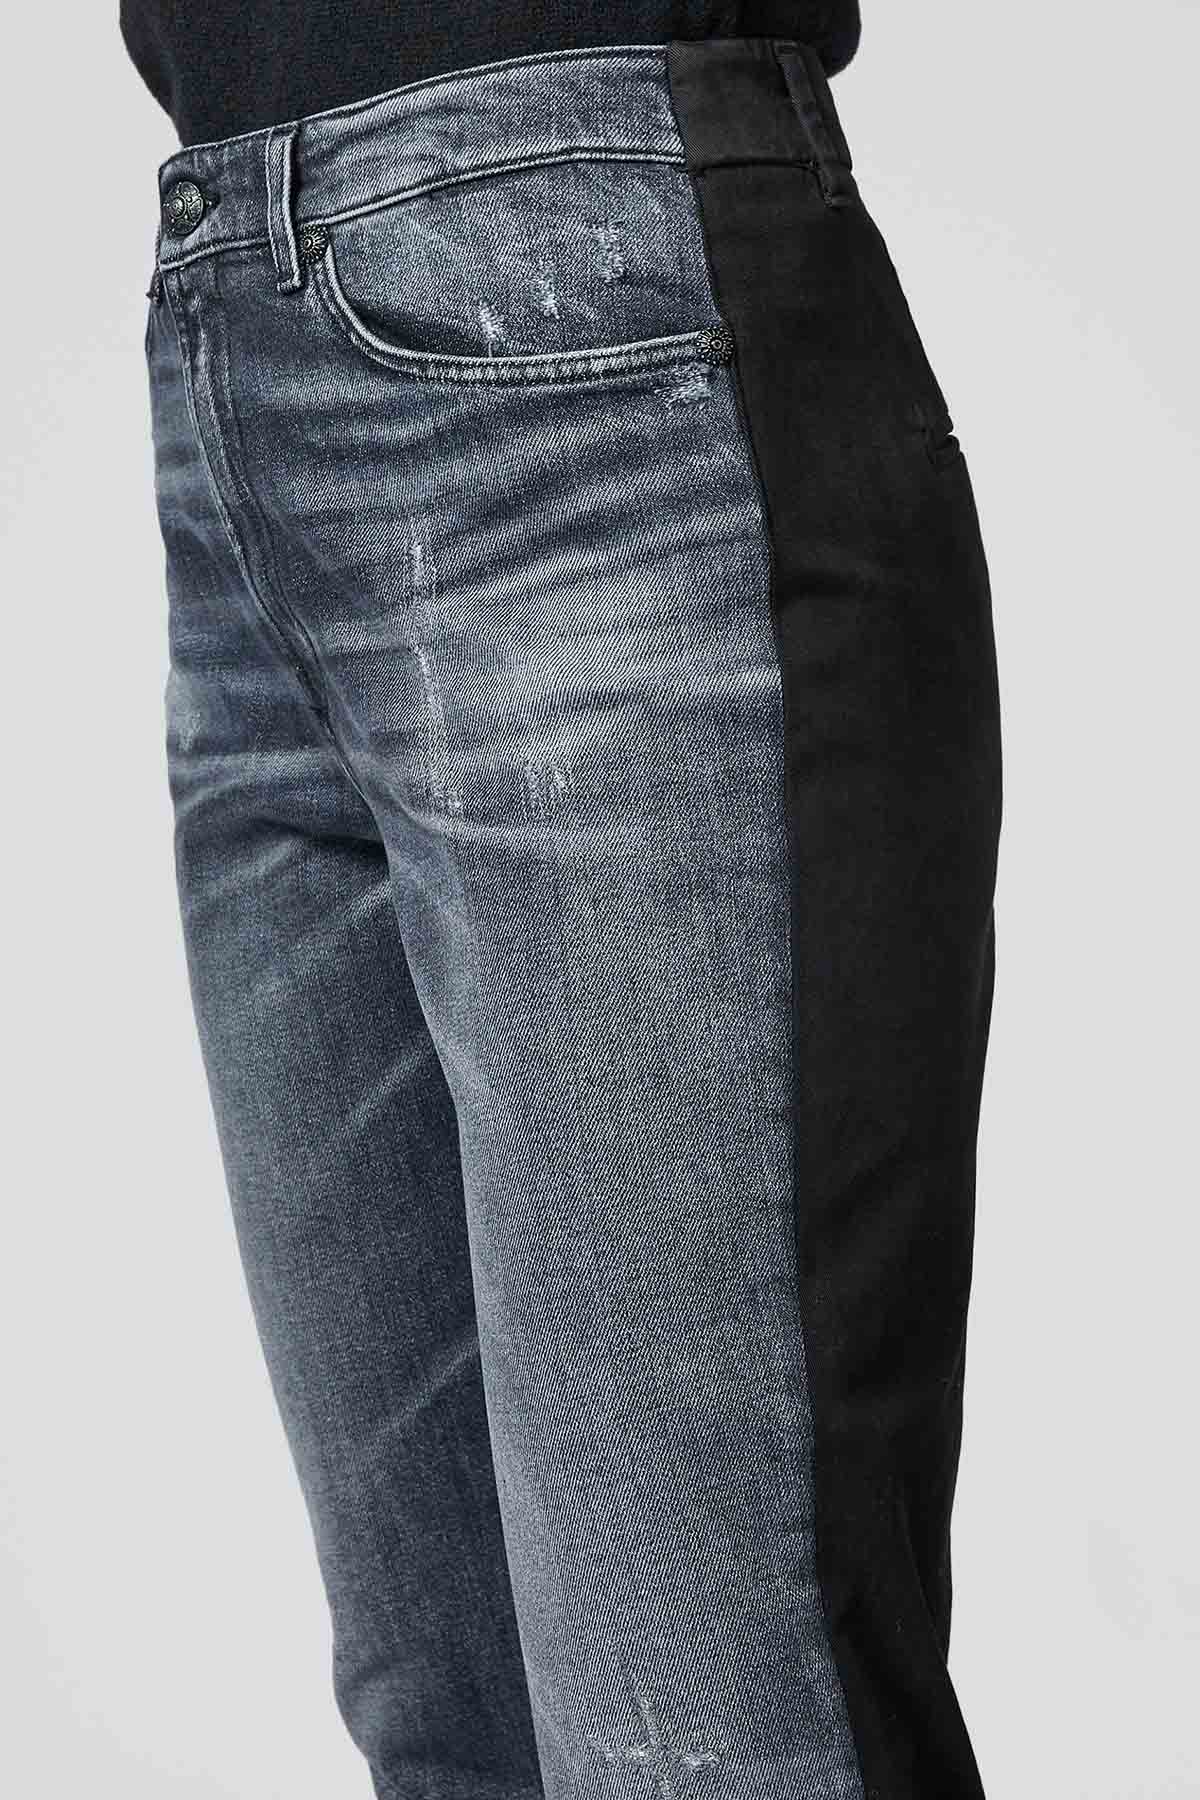 Dondup Zoe Kumaş Kombinasyonlu Loose Fit Jeans-Libas Trendy Fashion Store